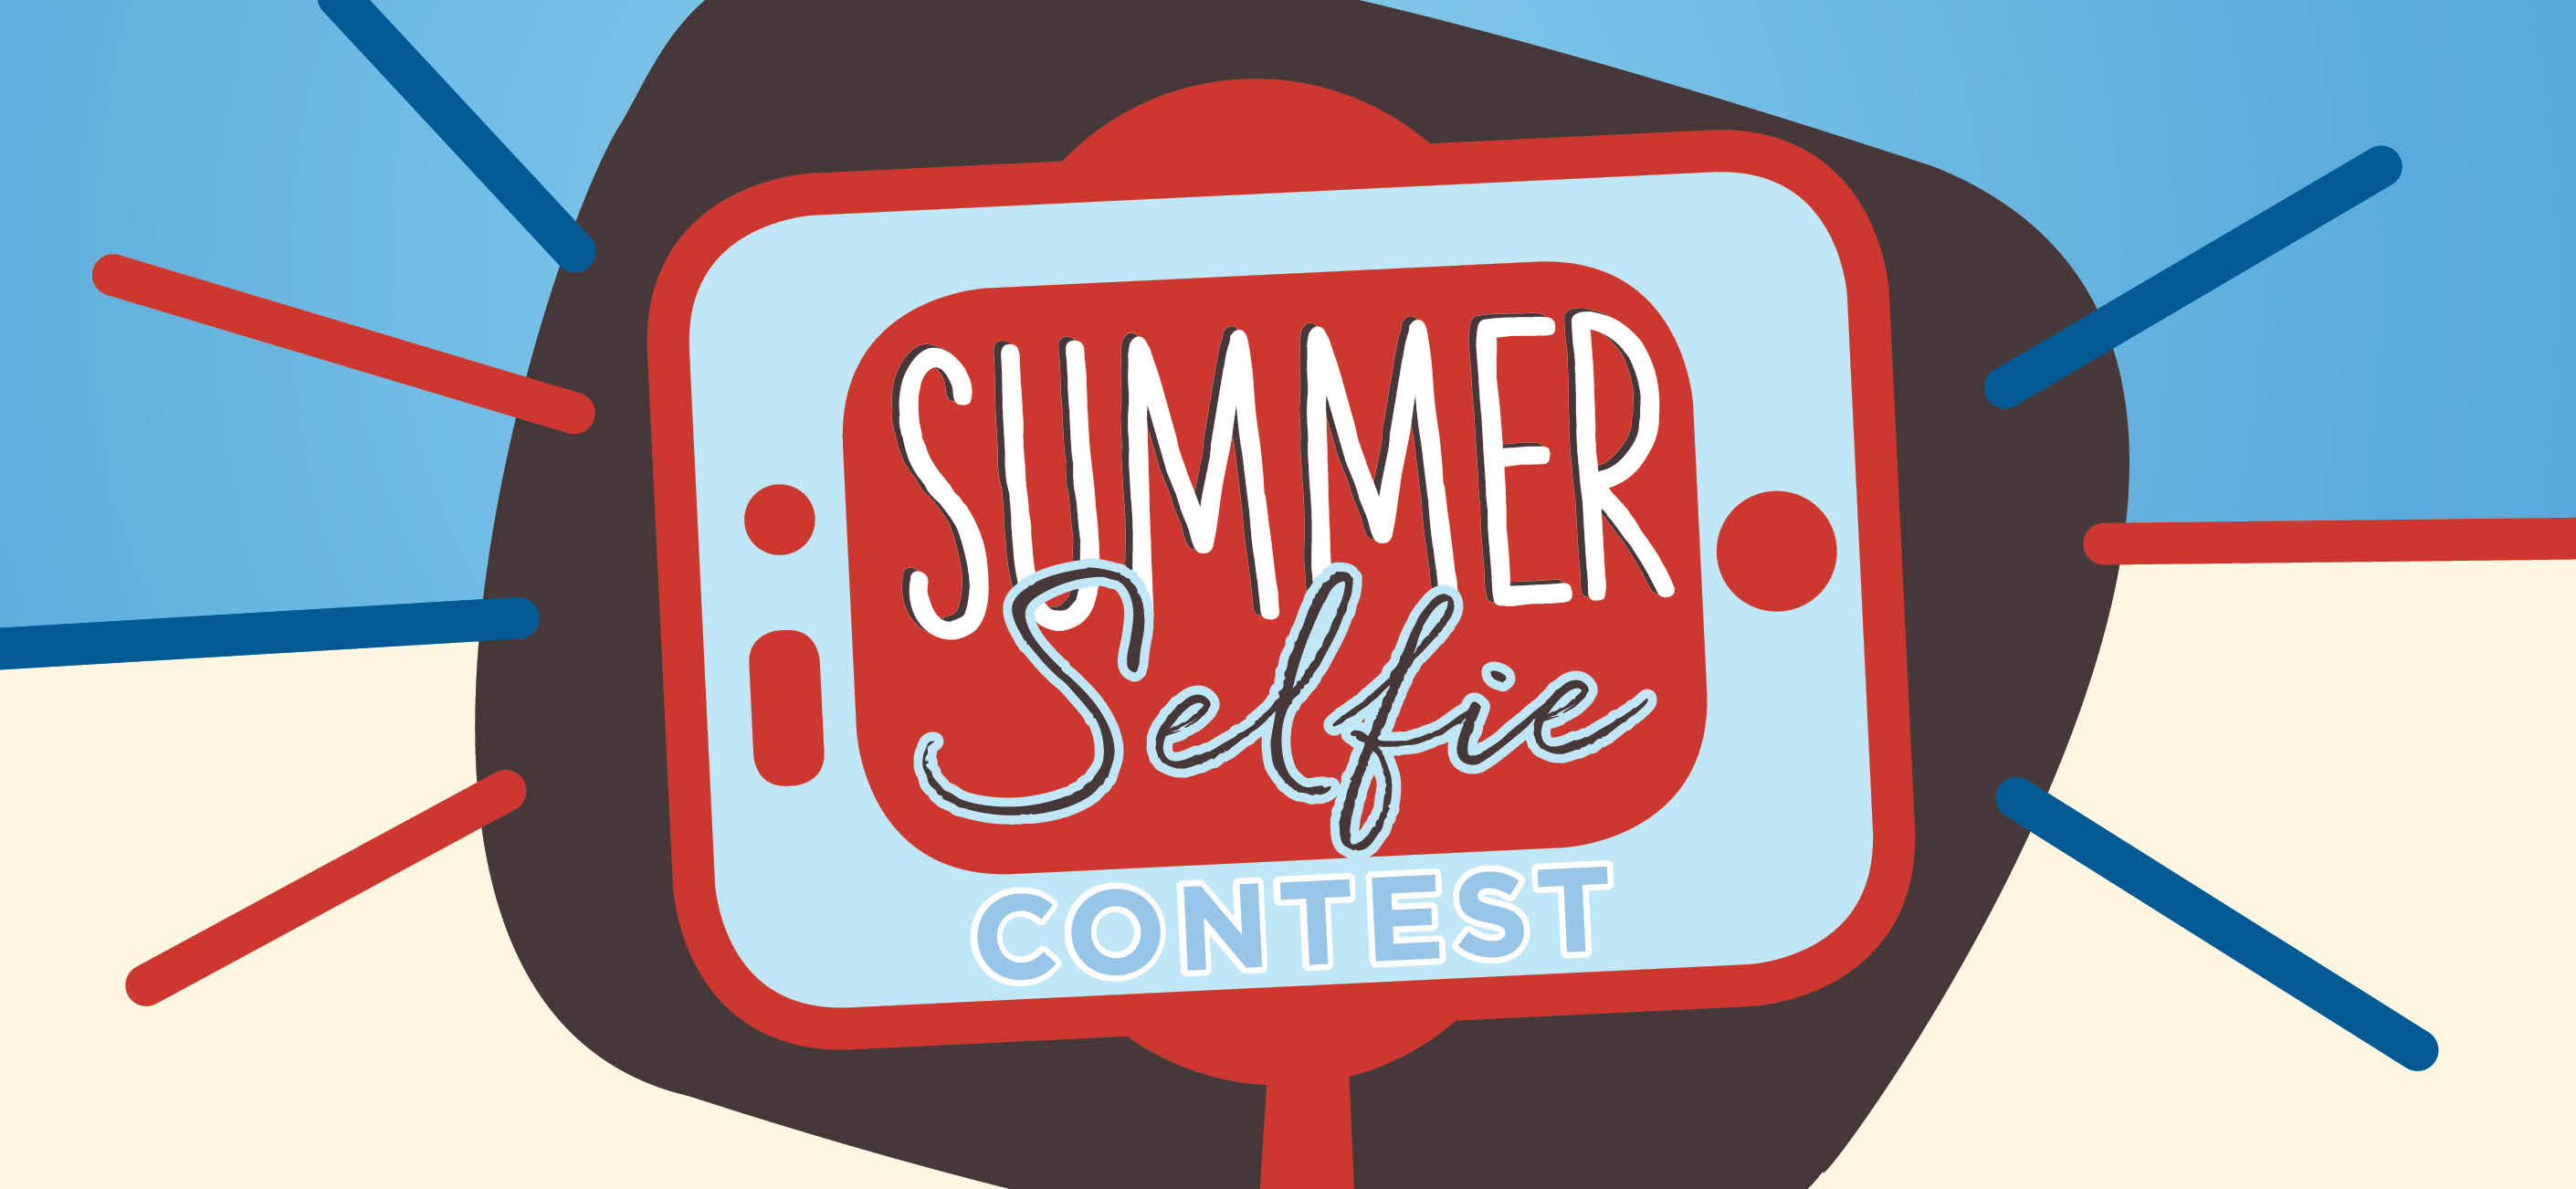 Summer selfie contest.